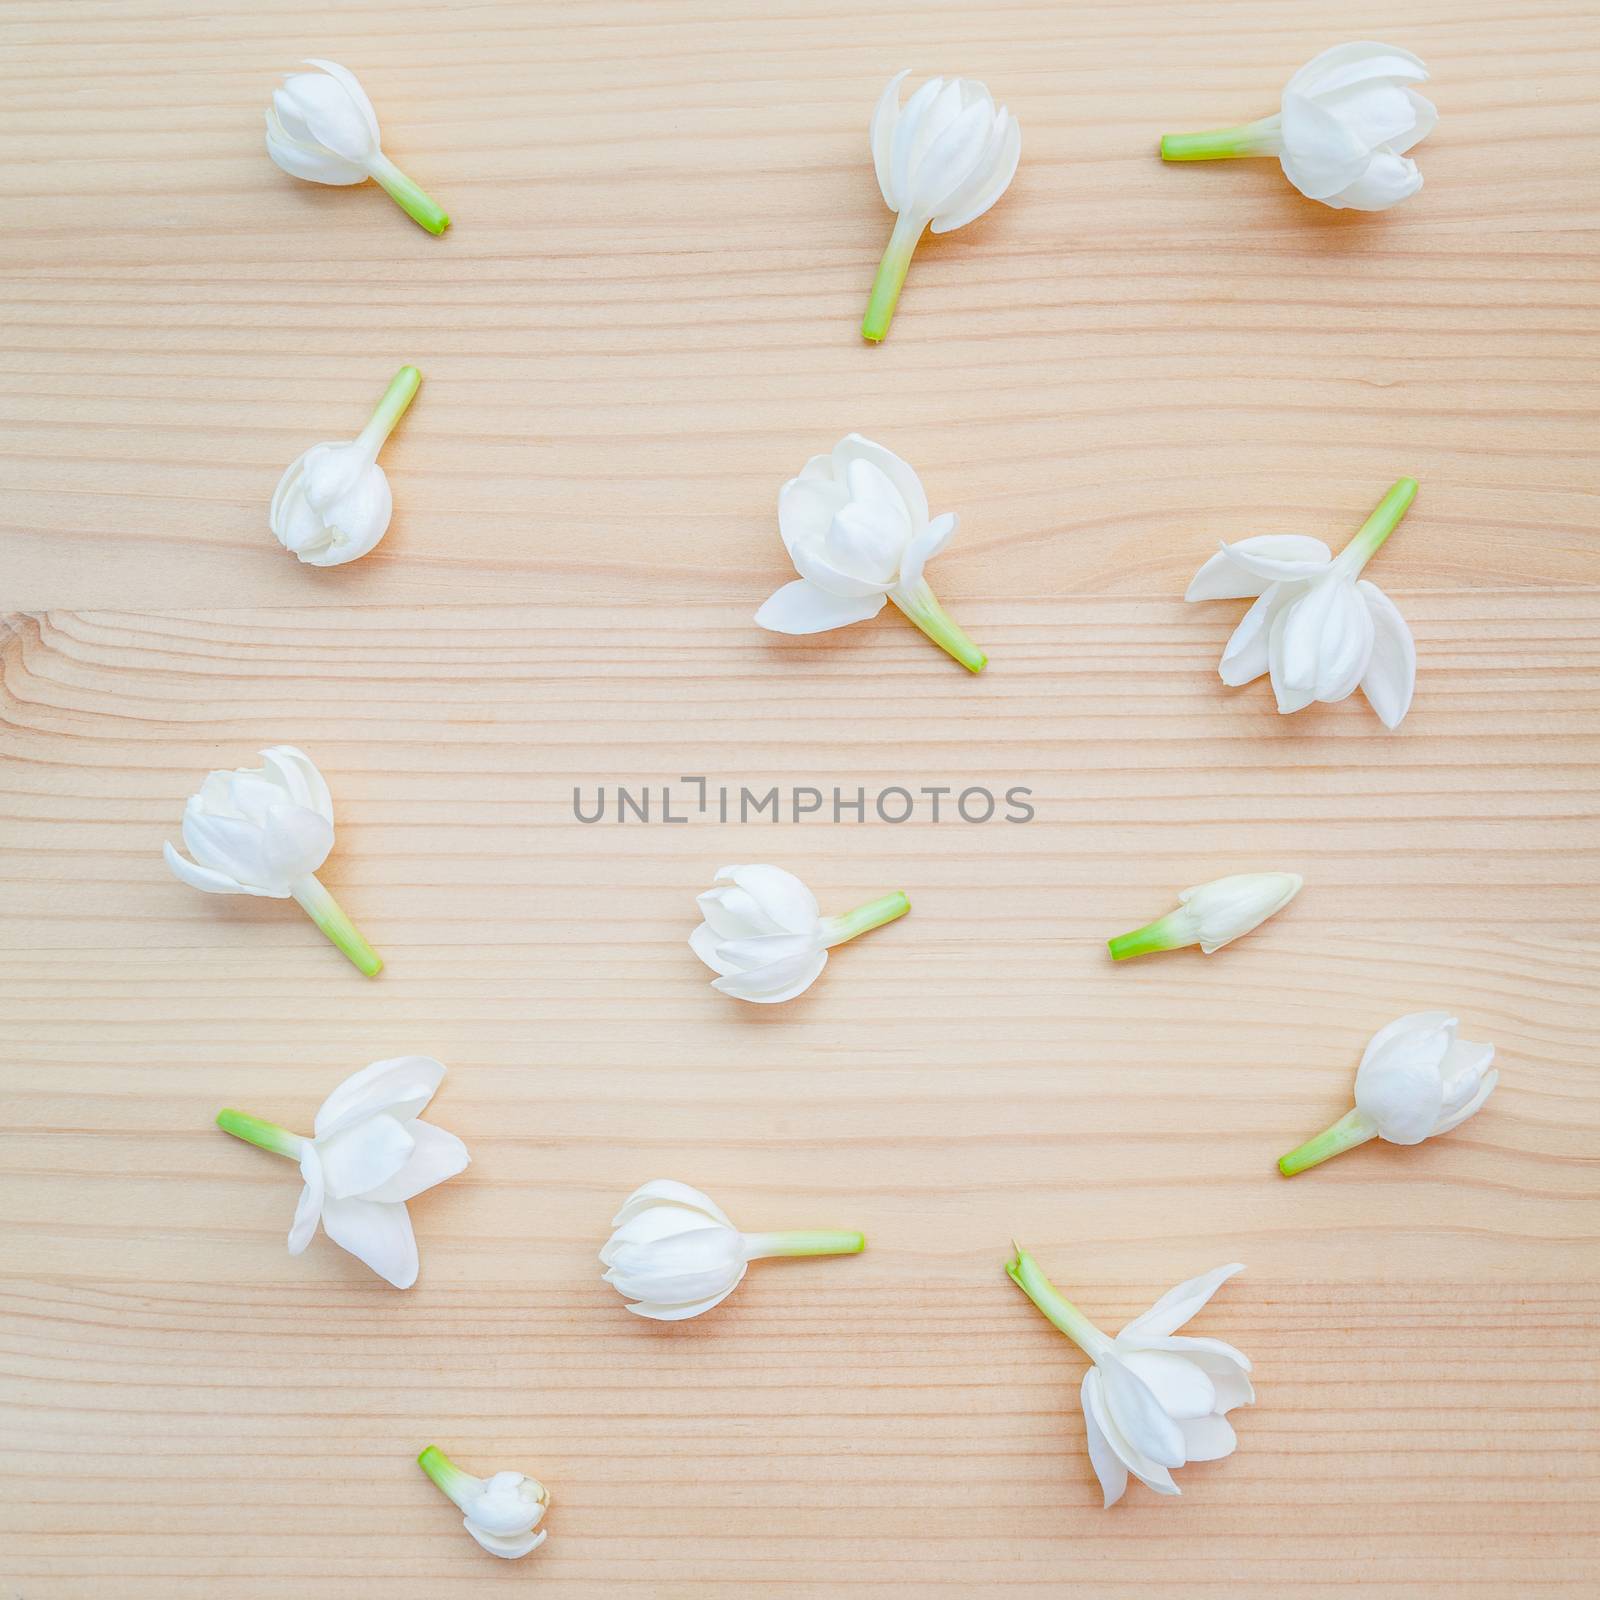 White jasmine flowers on wooden background. The delicate rain se by kerdkanno